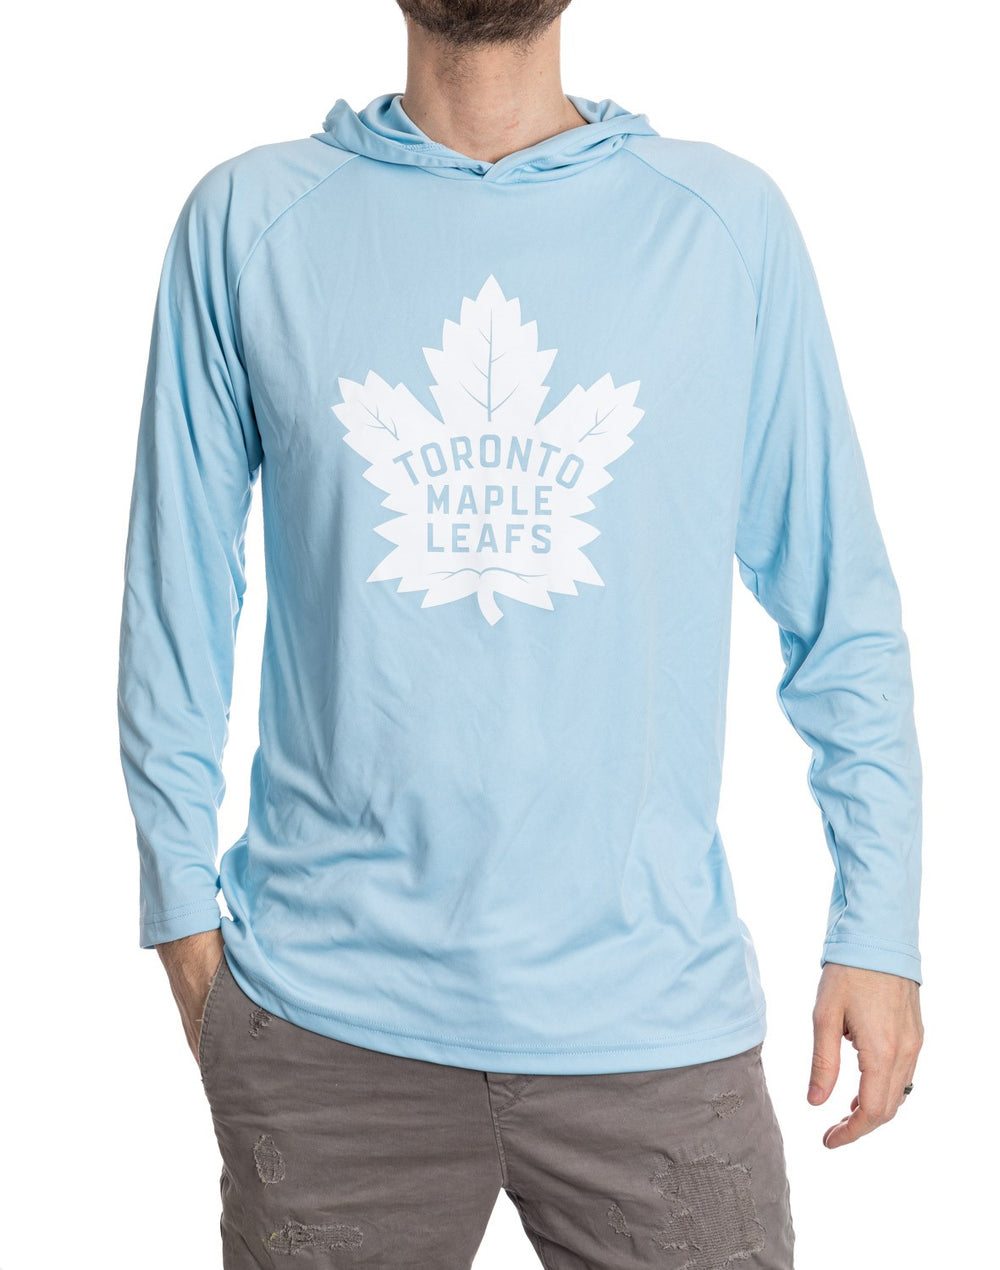 Toronto Maple Leafs Hooded Rashguard with UV Protection